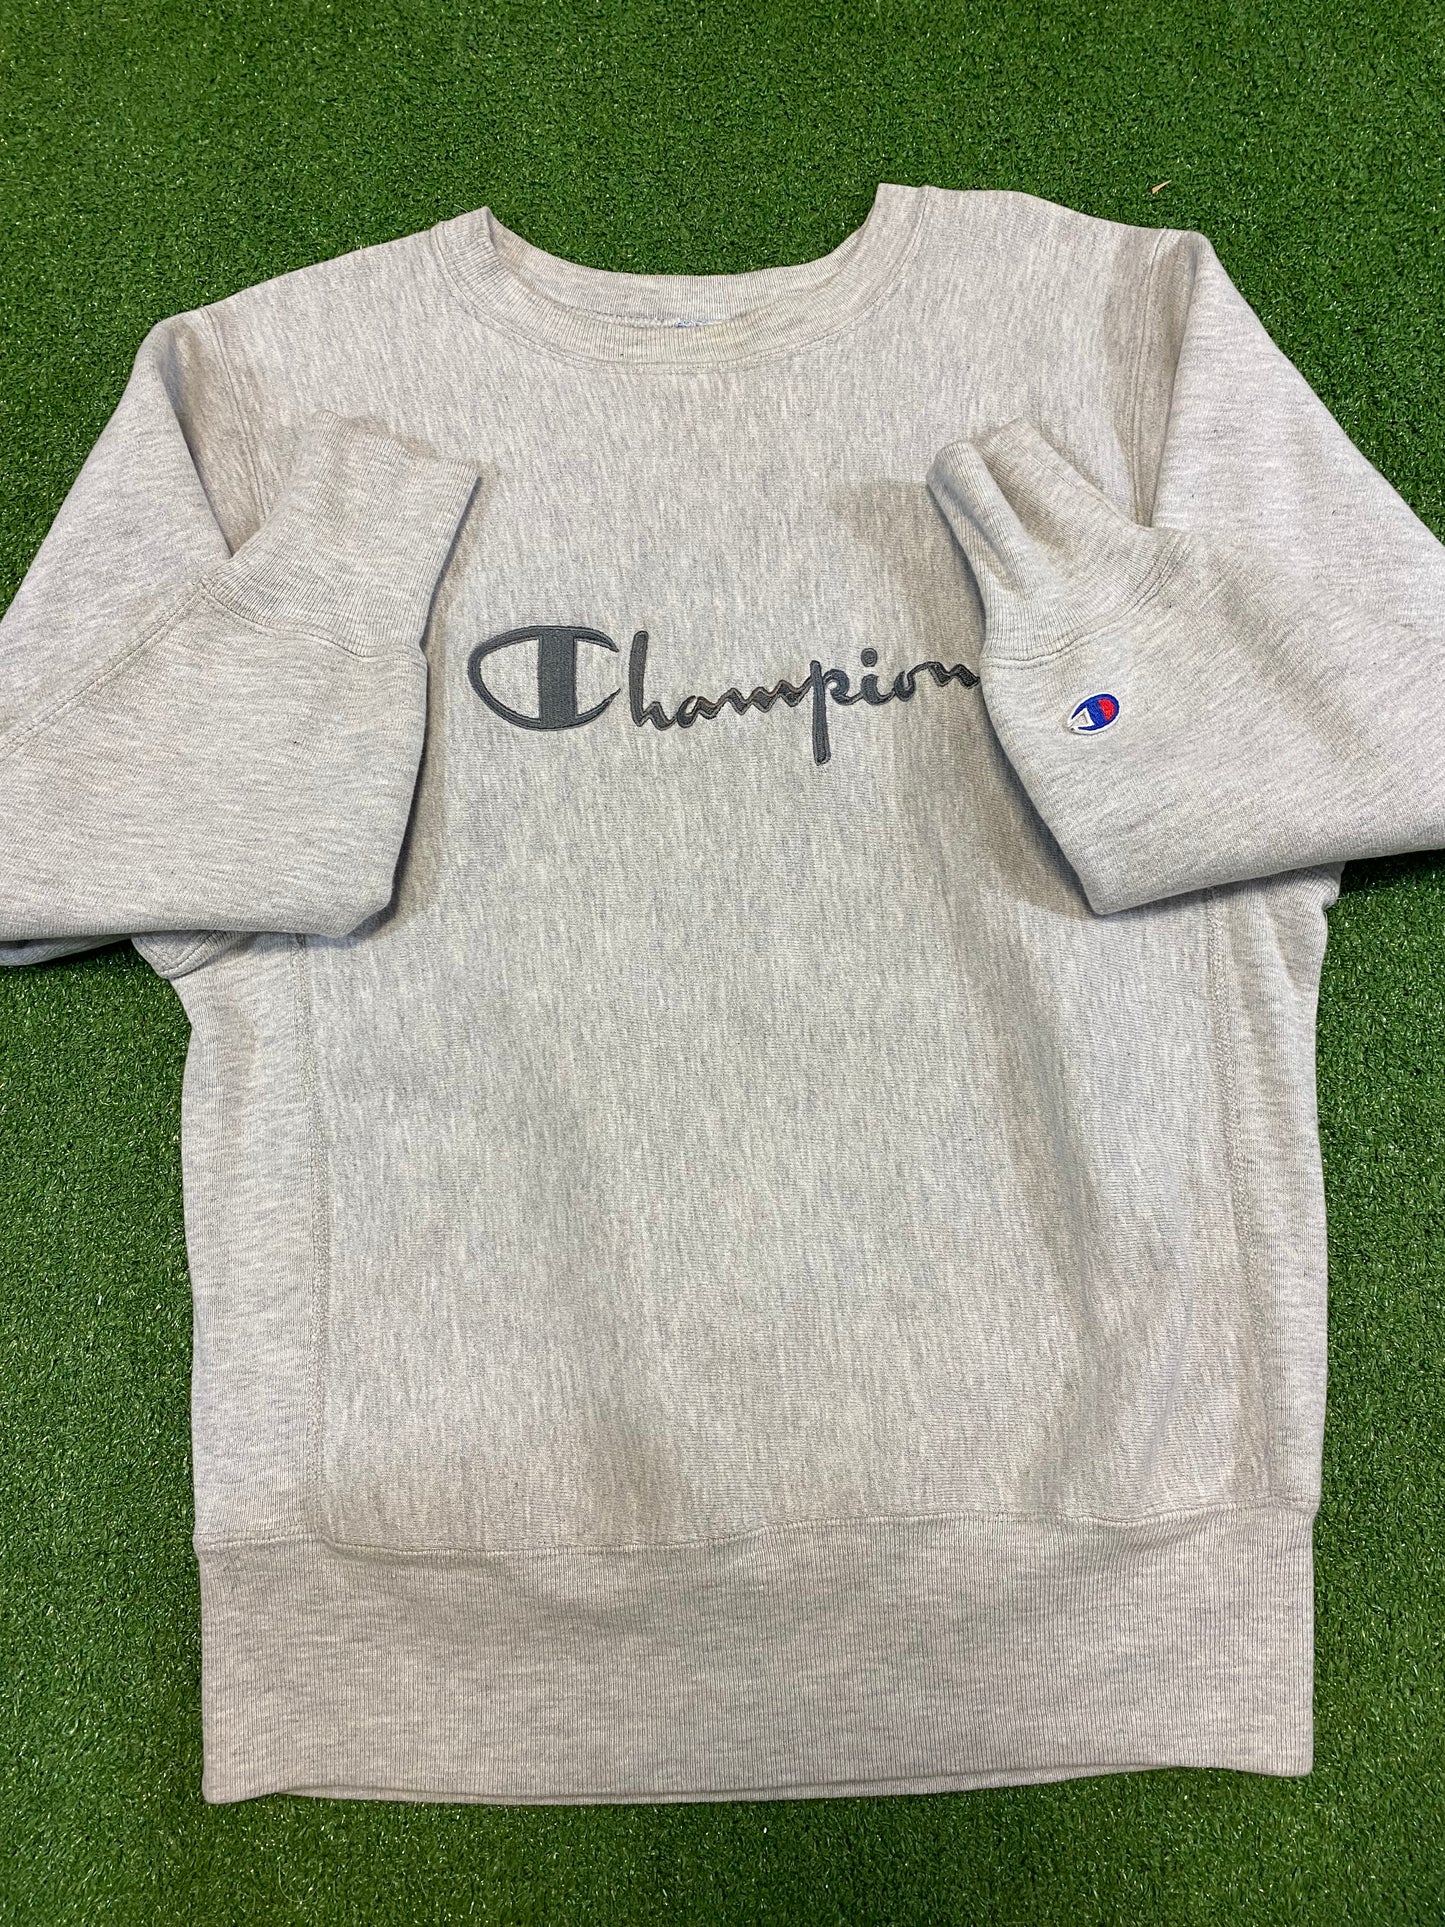 1990’s Champion Reverse Weave Spellout Sweatshirt M